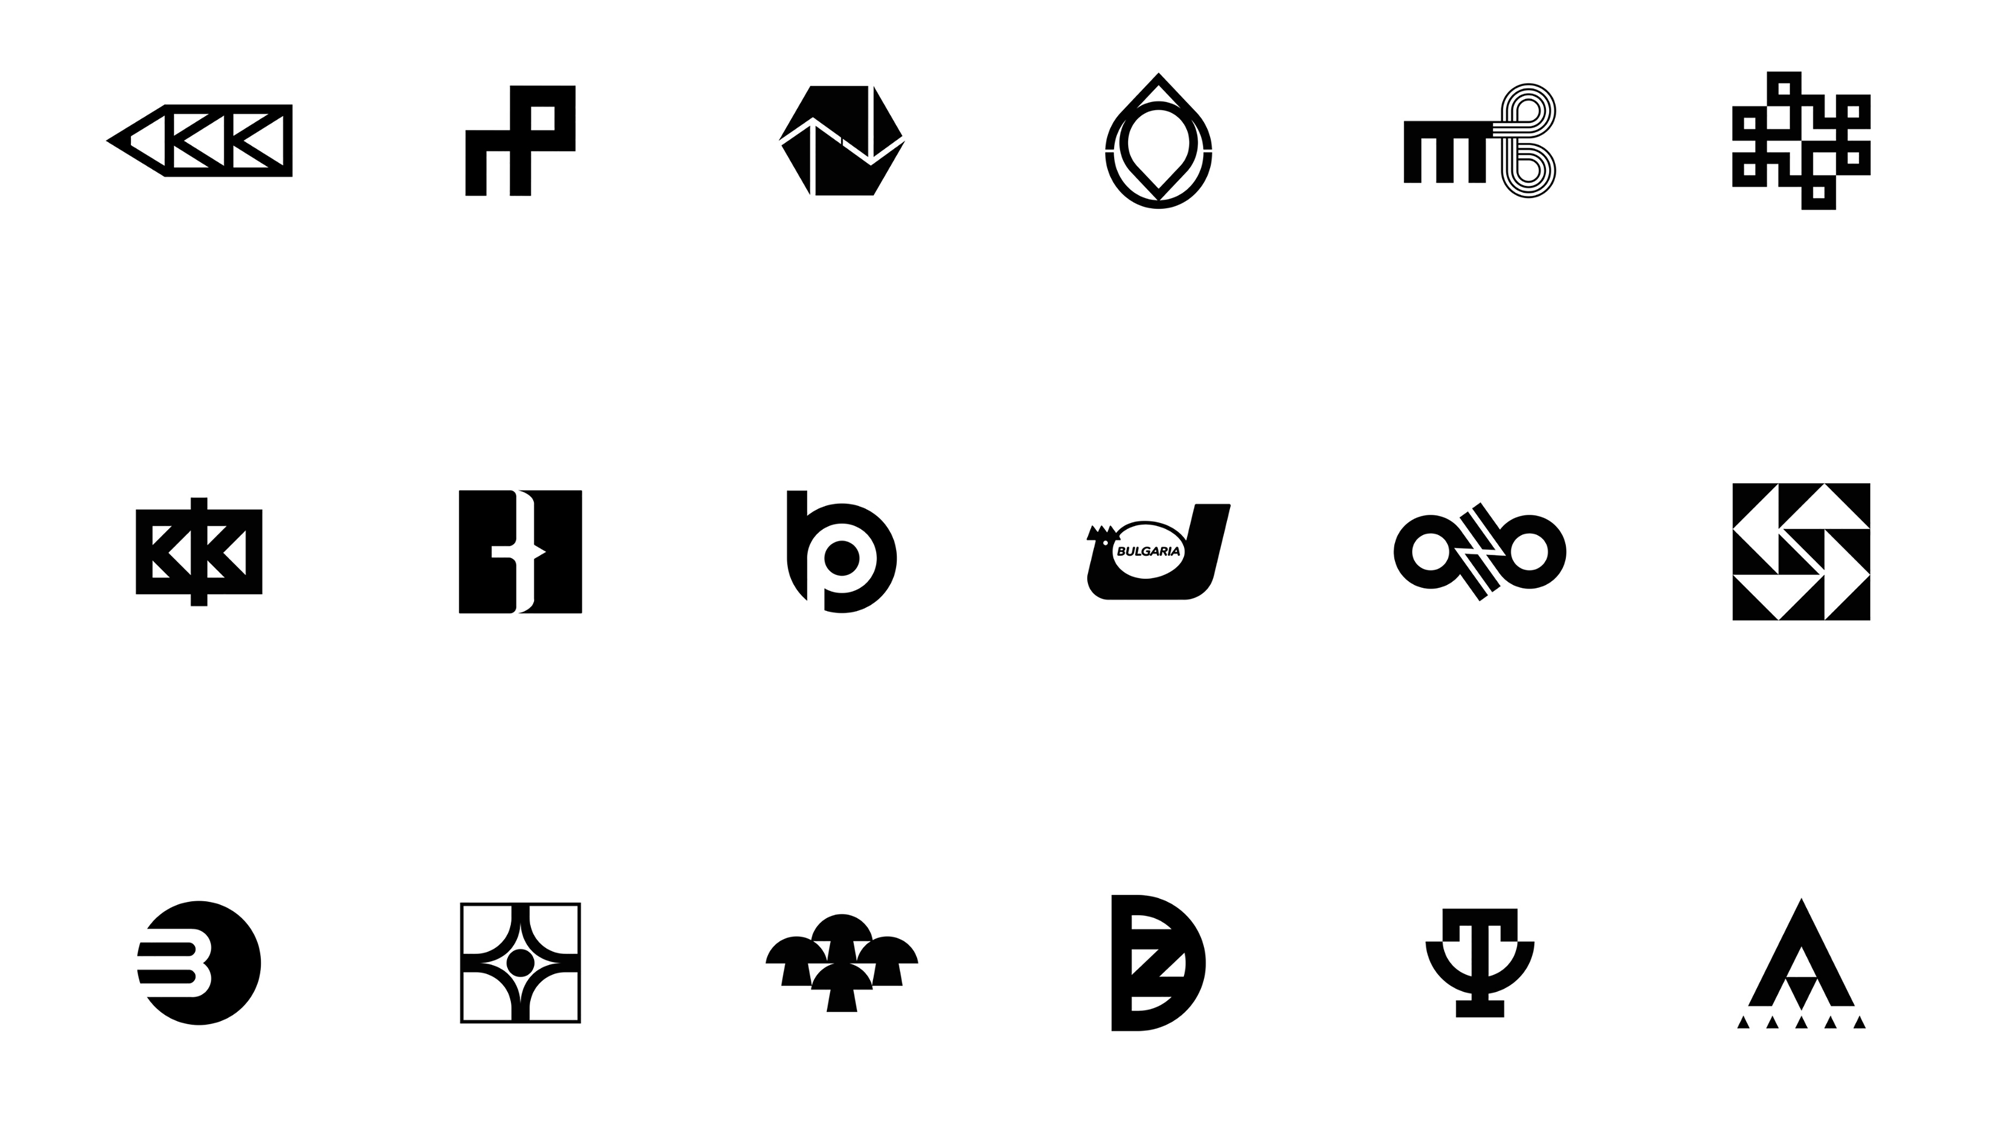 1960s – 80s Bulgarian Logos